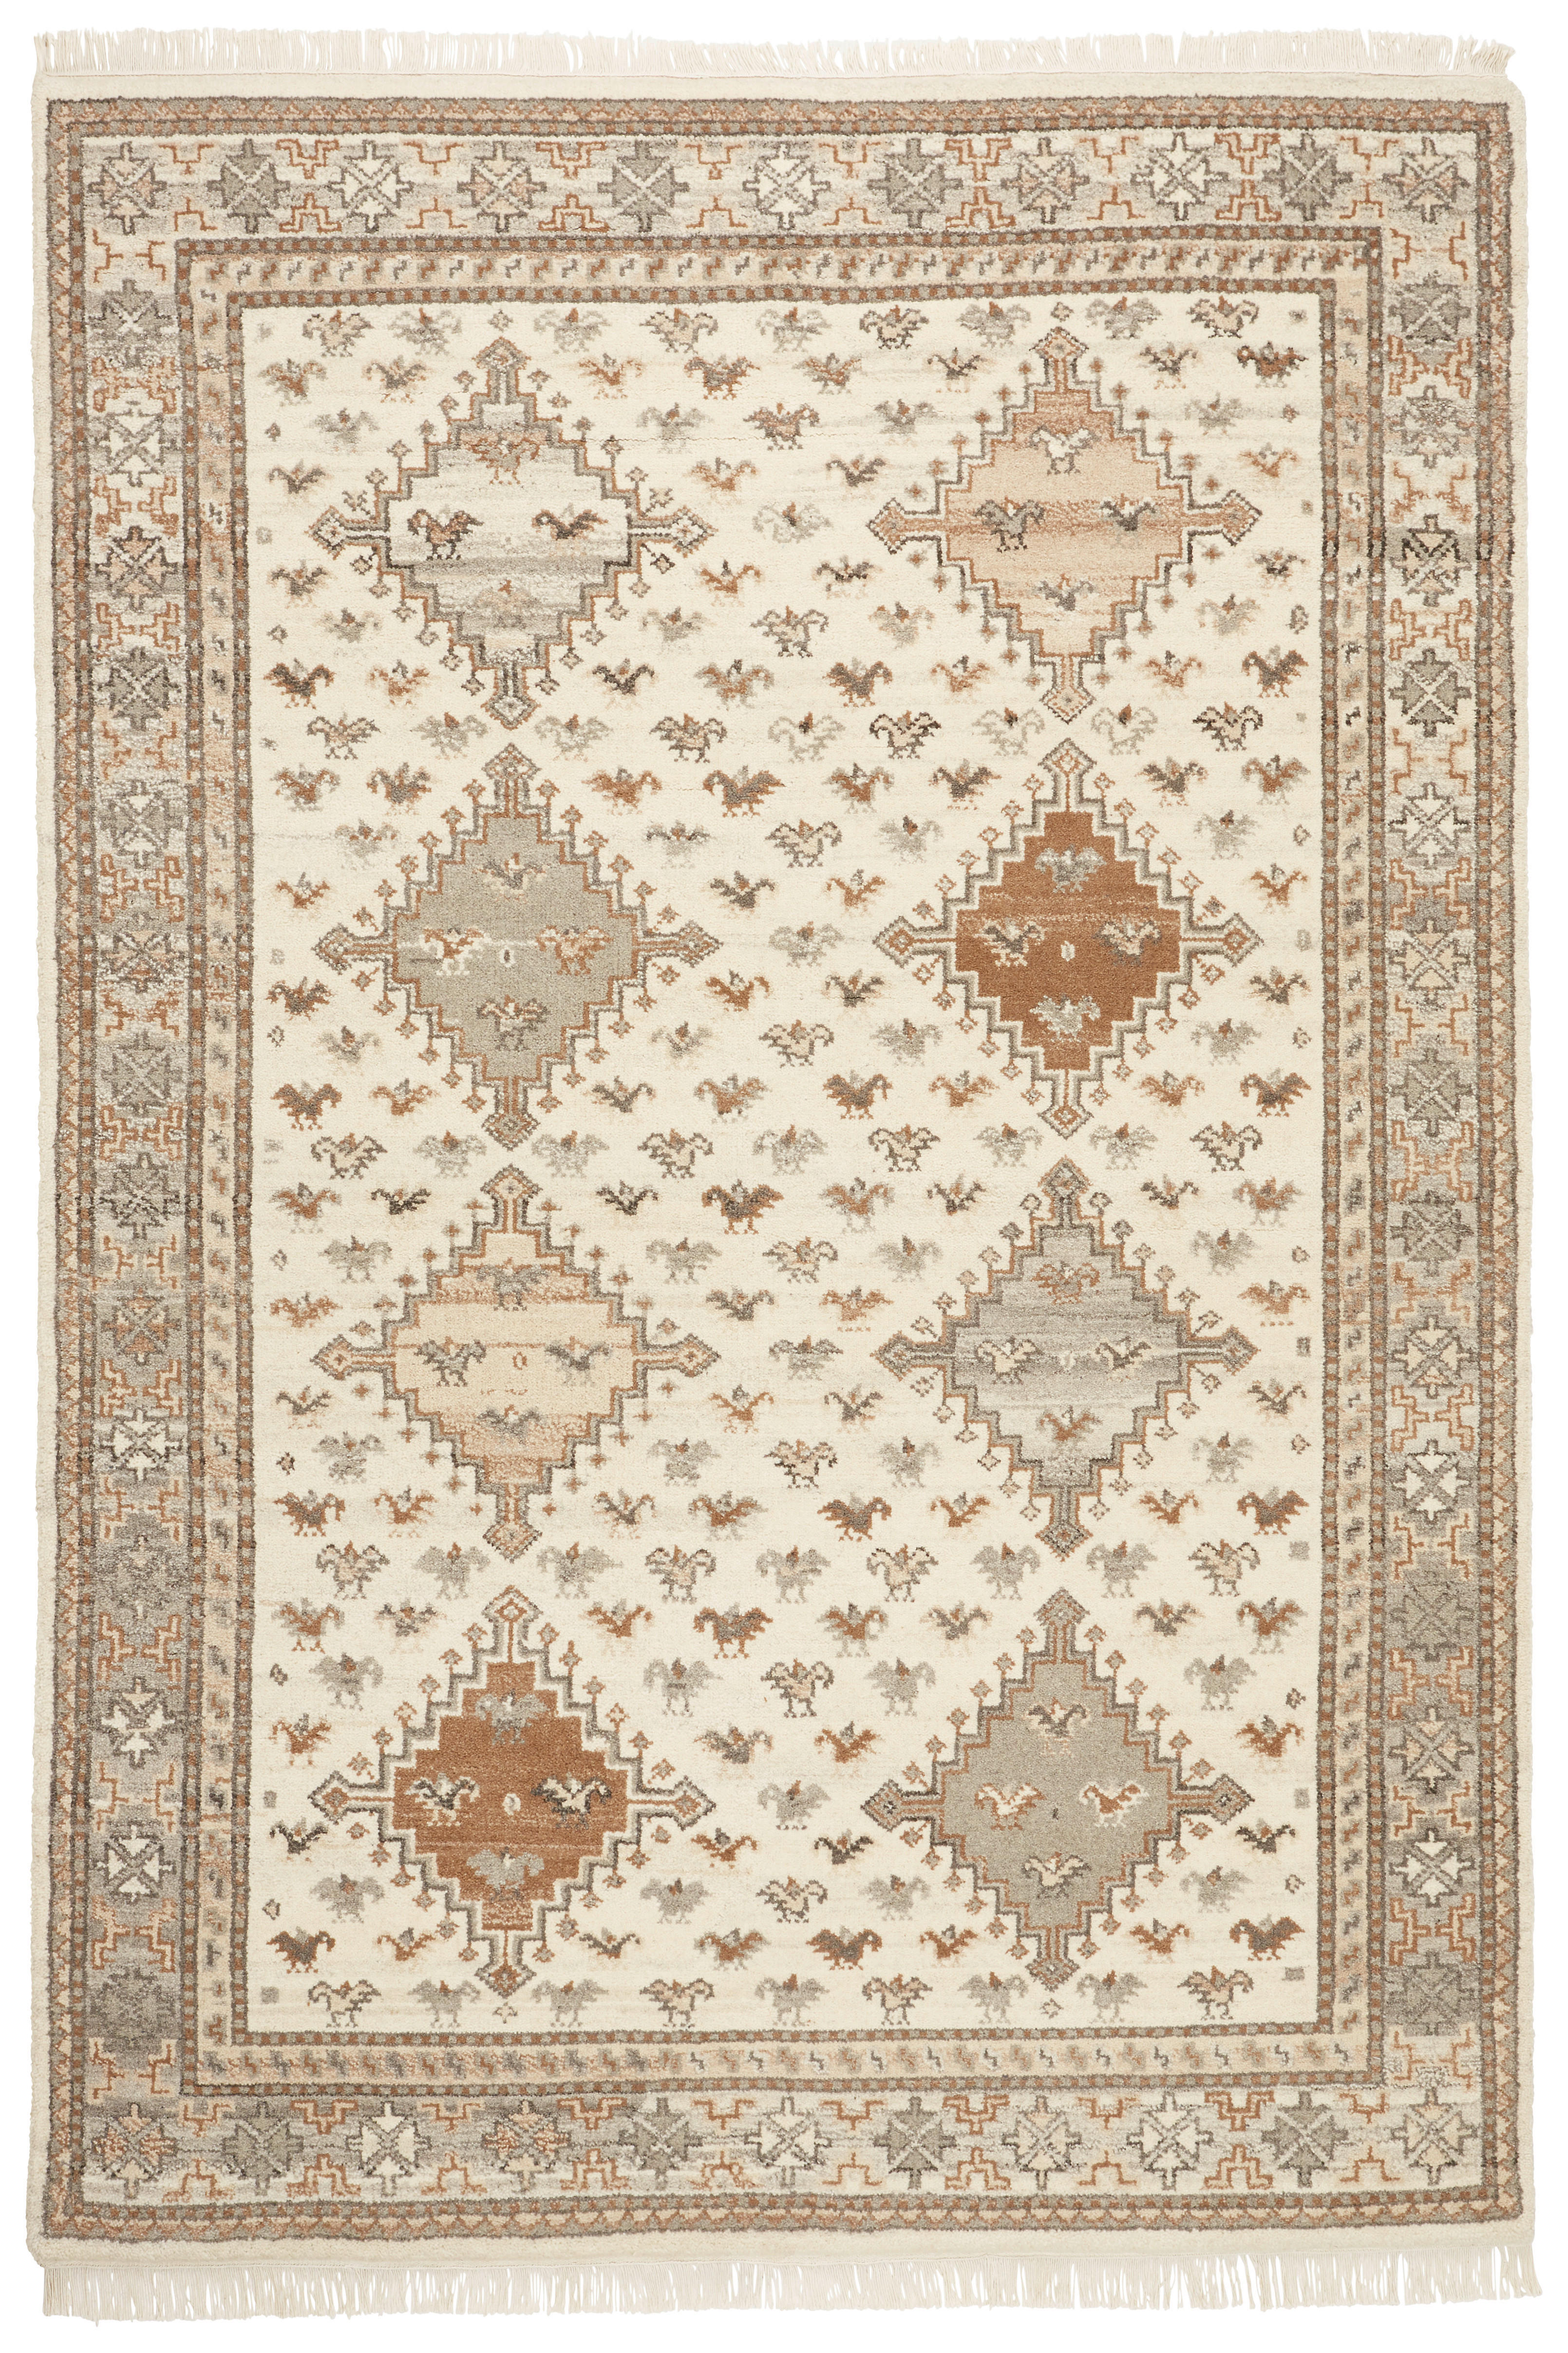 ORIENTALISK MATTA Kazak Exklusiv   - brun/naturfärgad, Lifestyle, textil (60/90cm) - Cazaris